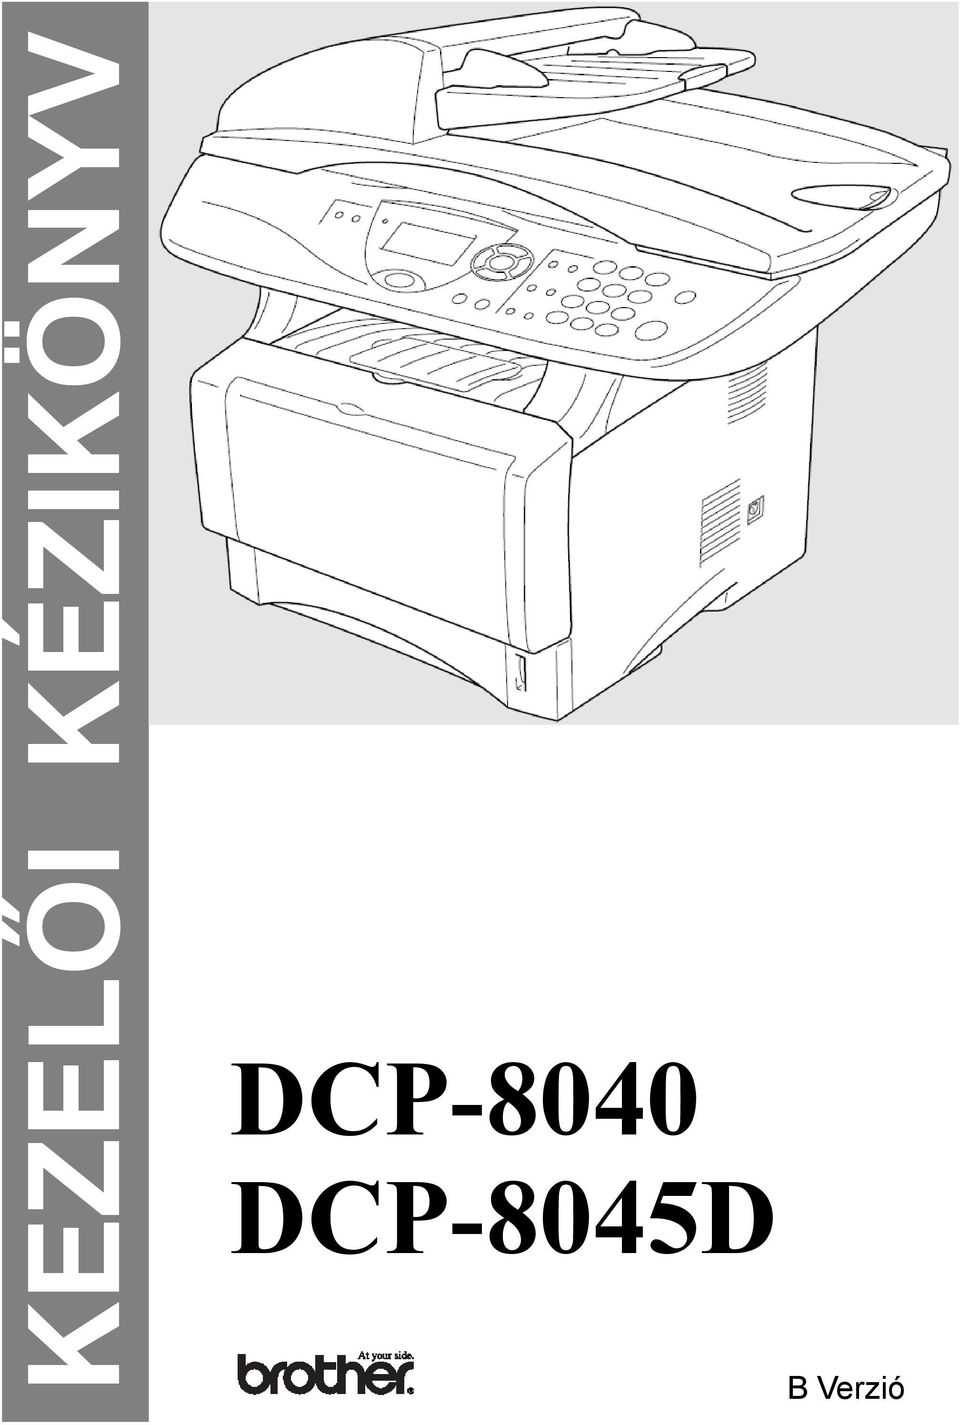 DCP-8040